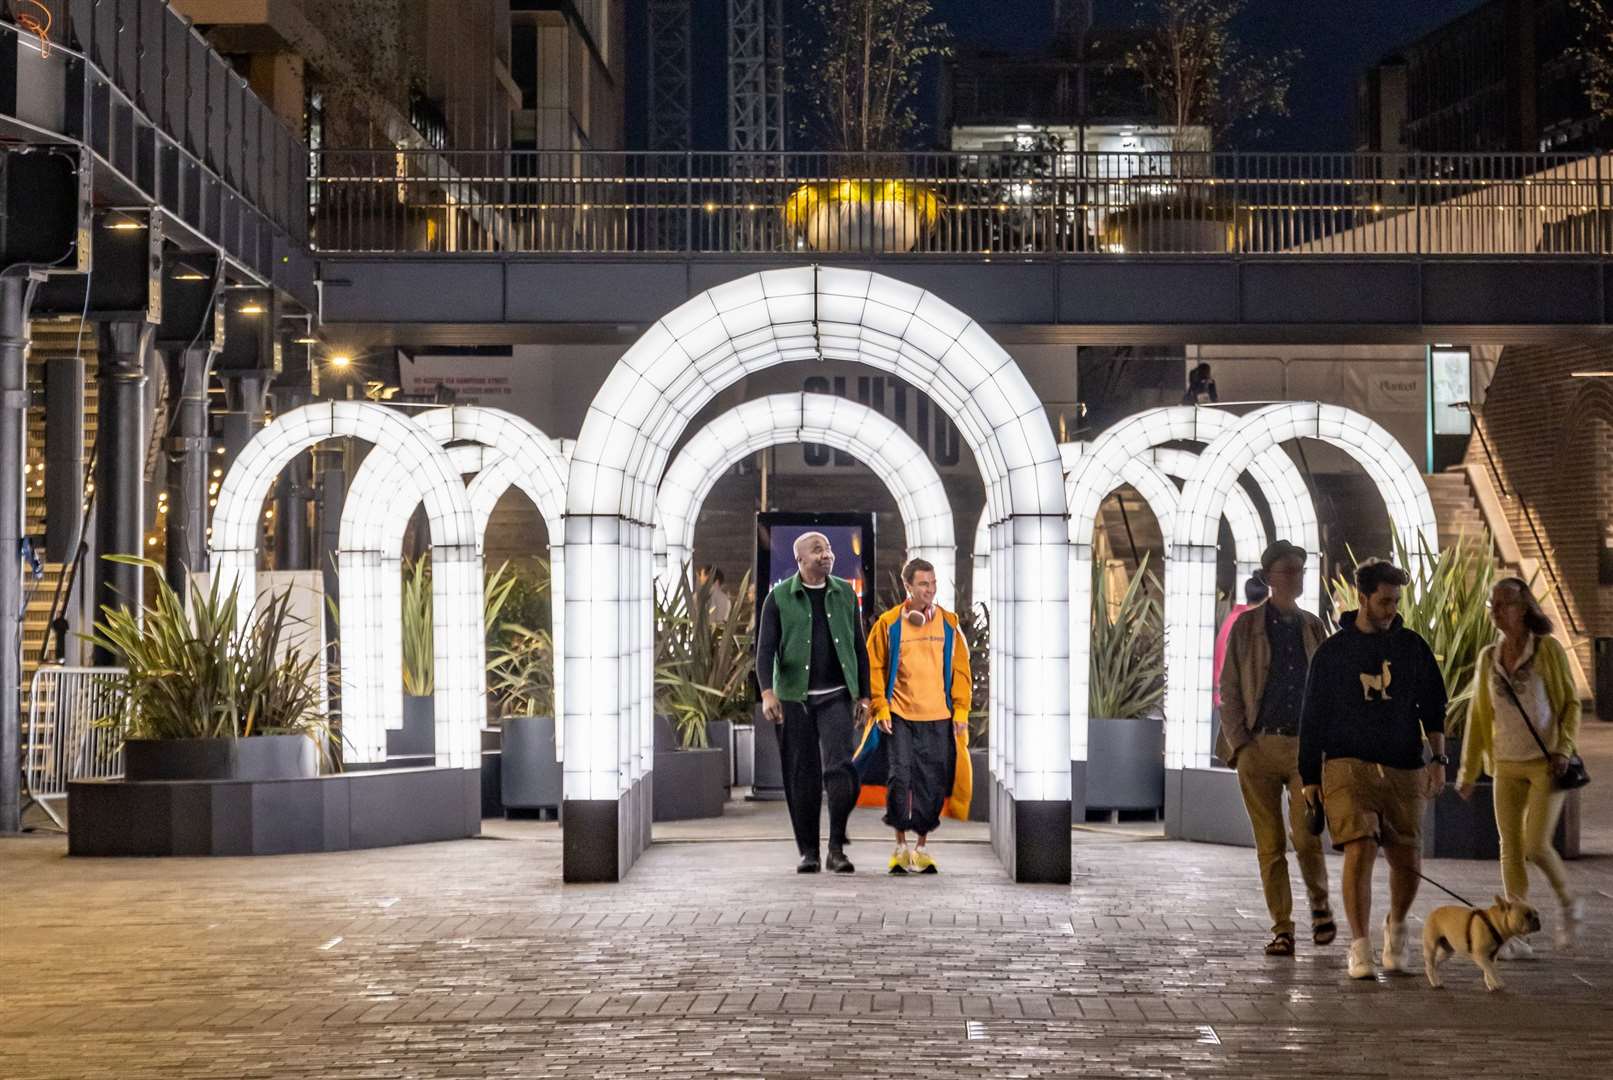 Modern Design Review x Super Nature presents ‘The Illuminated Garden featuring Super Nature Tv’ in Coal Drops Yard, for London Design Festival 2021